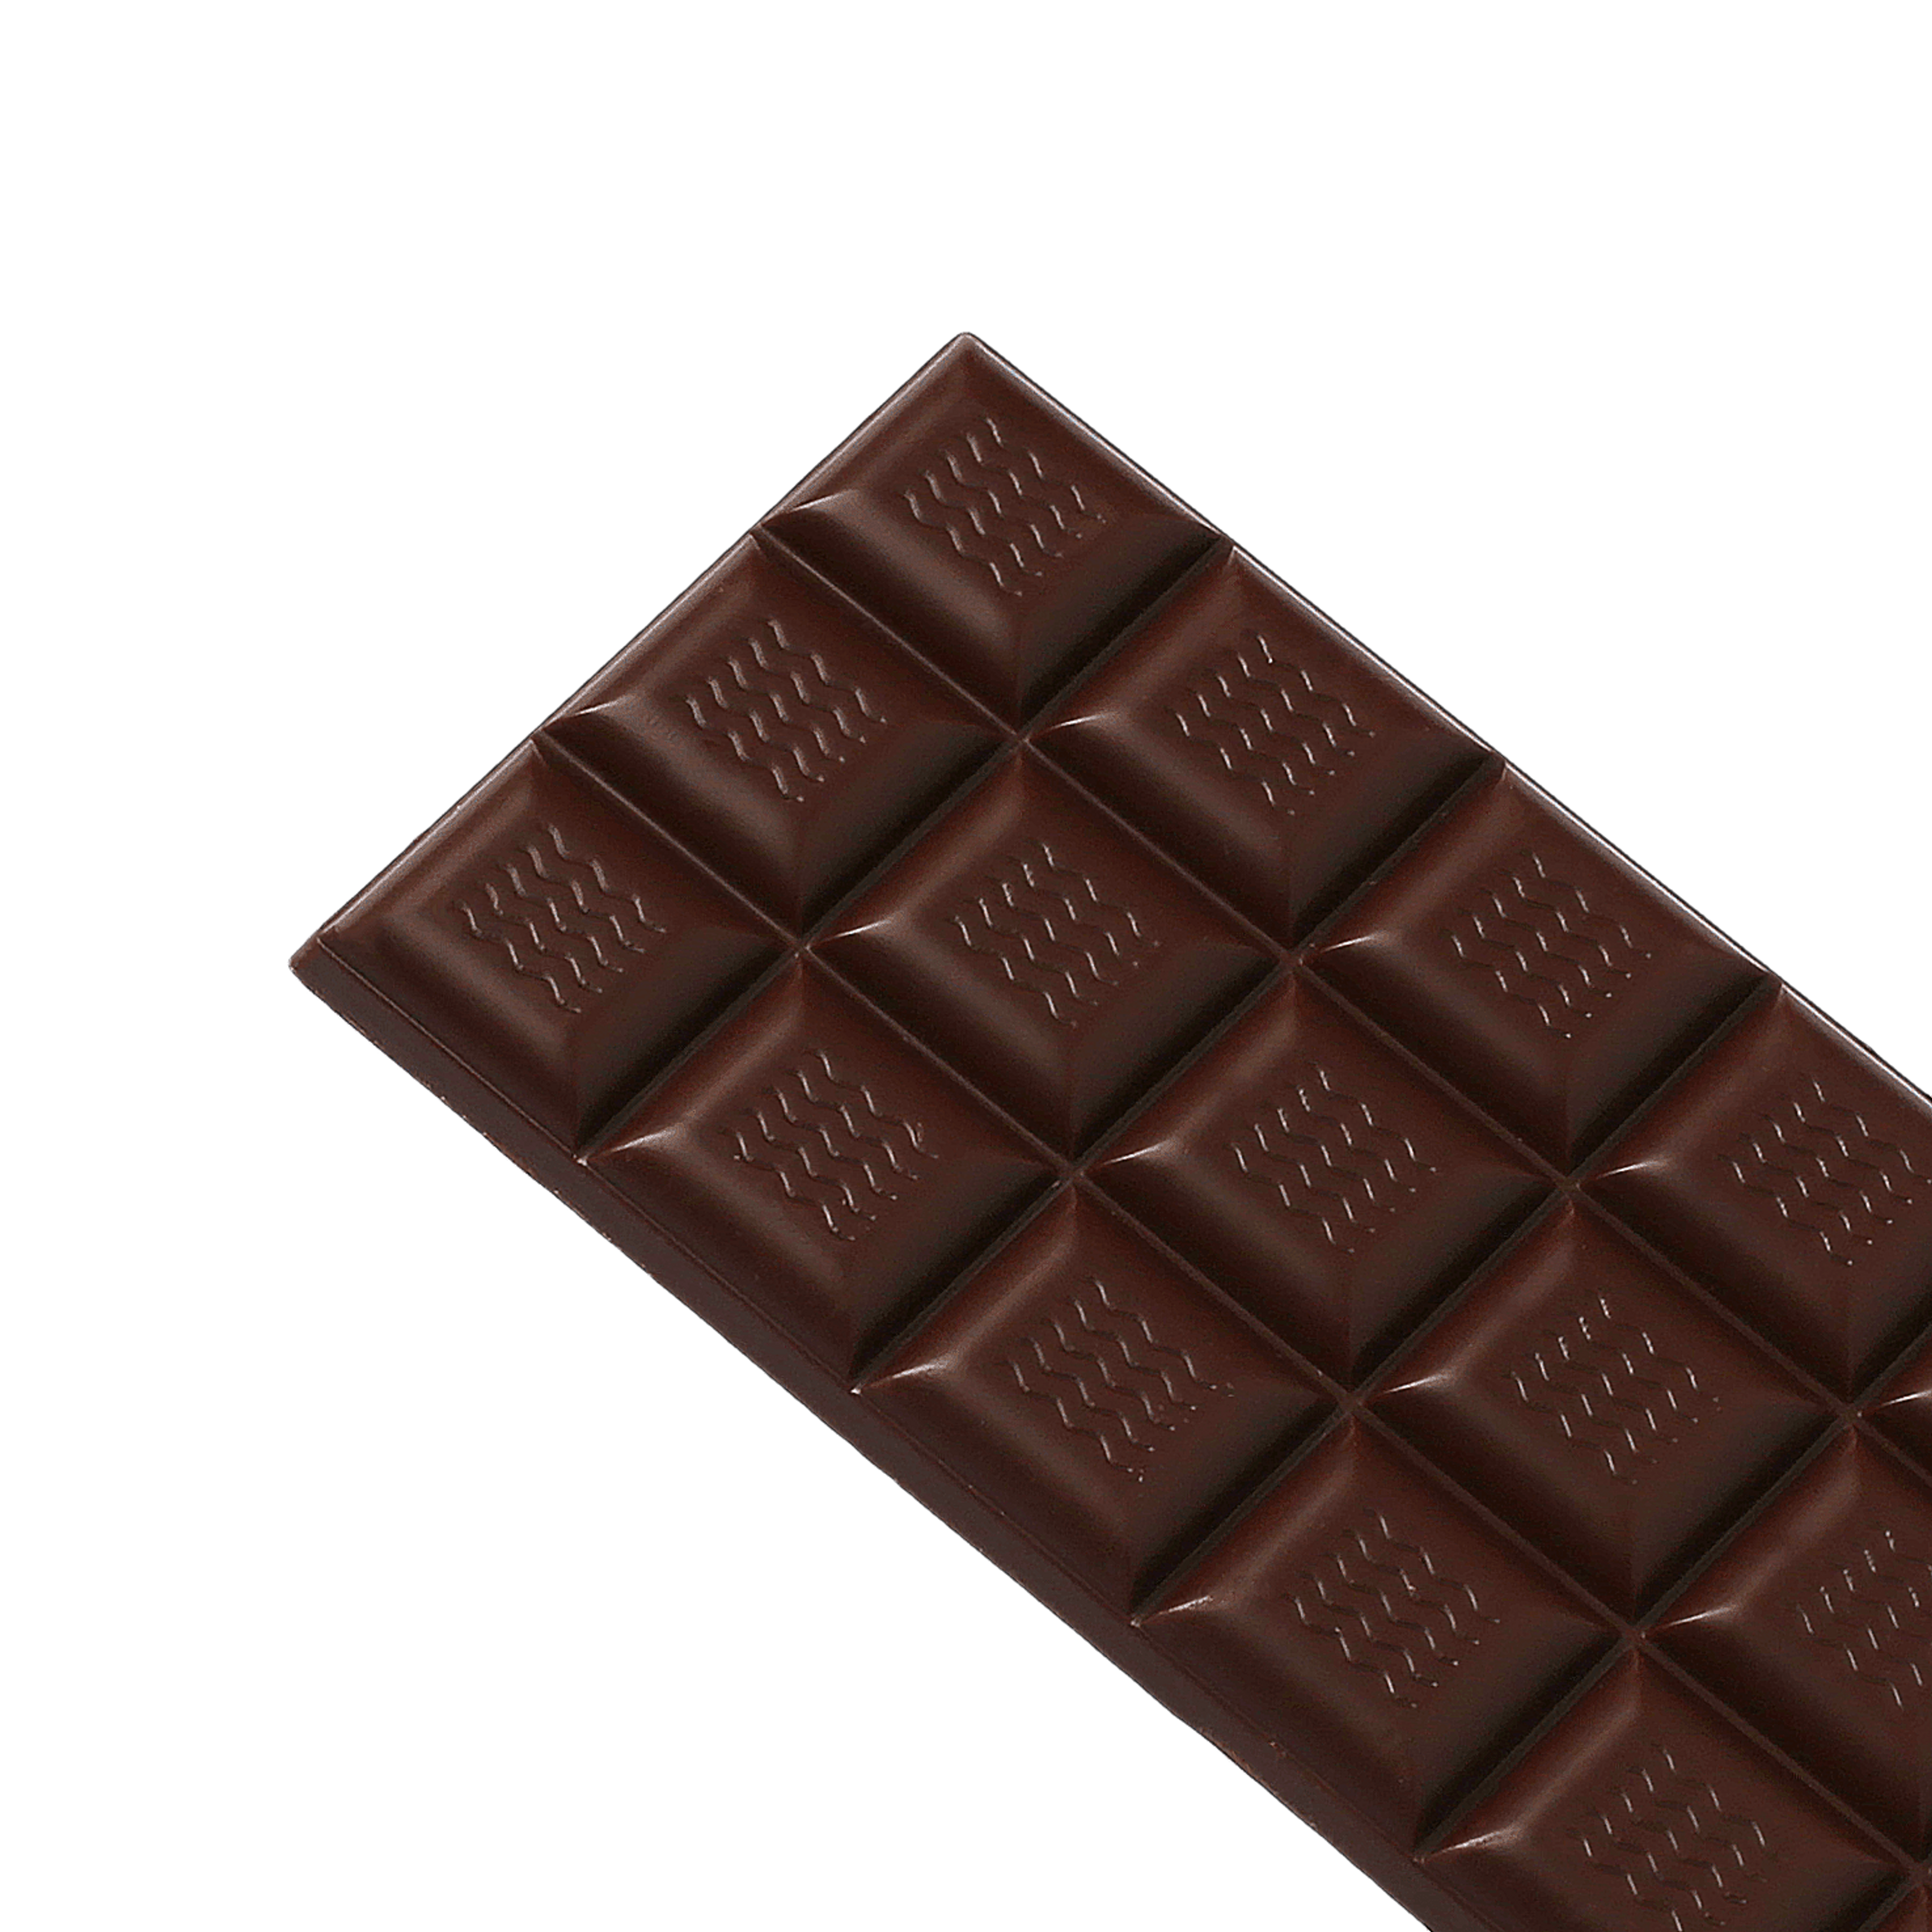 Costa Esmeraldas, Ecuador 2020 85% Batch 2 Single-Origin Chocolate Bar